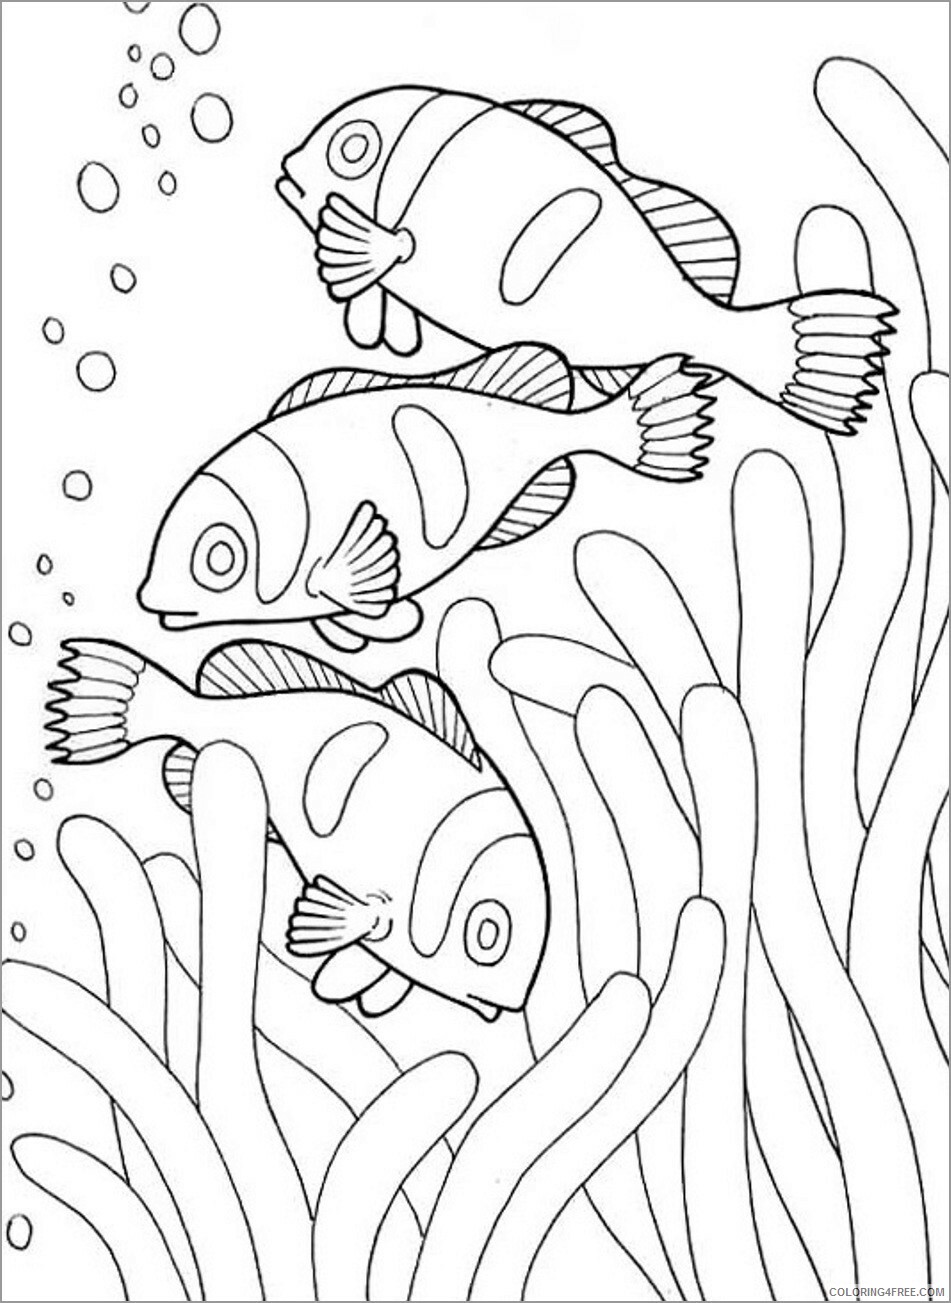 clownfish-coloring-pages-animal-printable-sheets-clown-fish-2021-1100